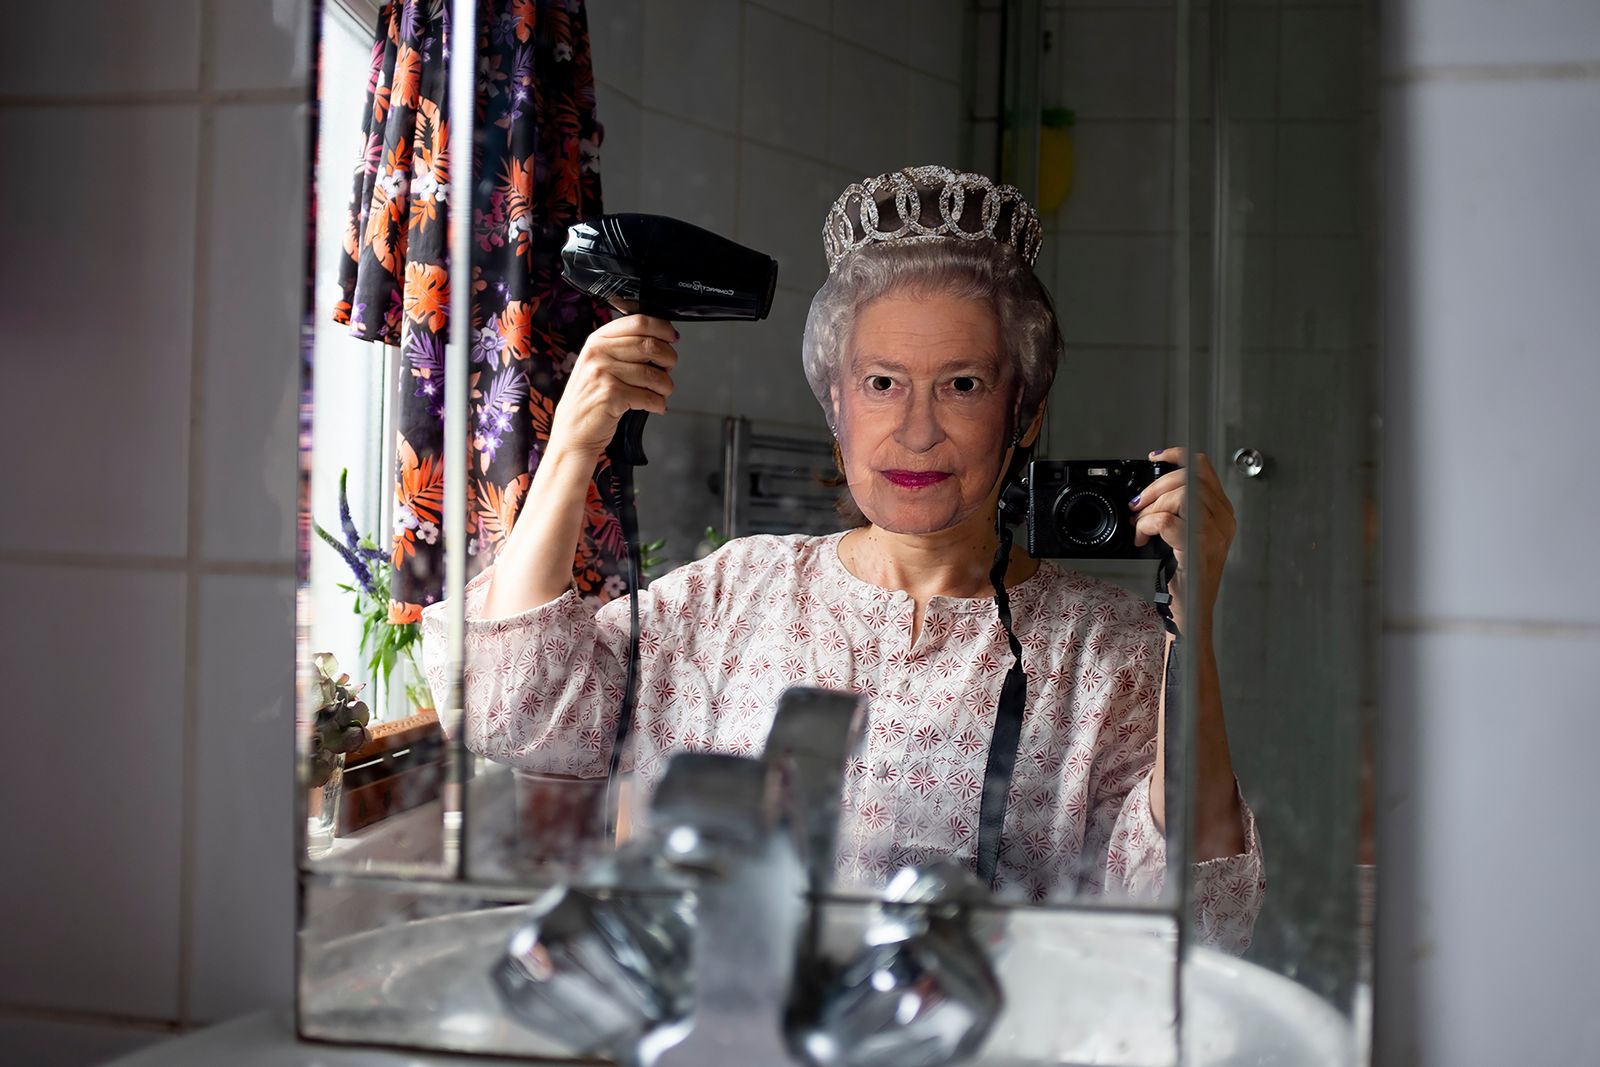 © Michela Carmazzi - "I wish I were Elizabeth in my bathroom" Self-portrait wearing a celebrity cardboard mask of Queen Elizabeth in my bathroom.